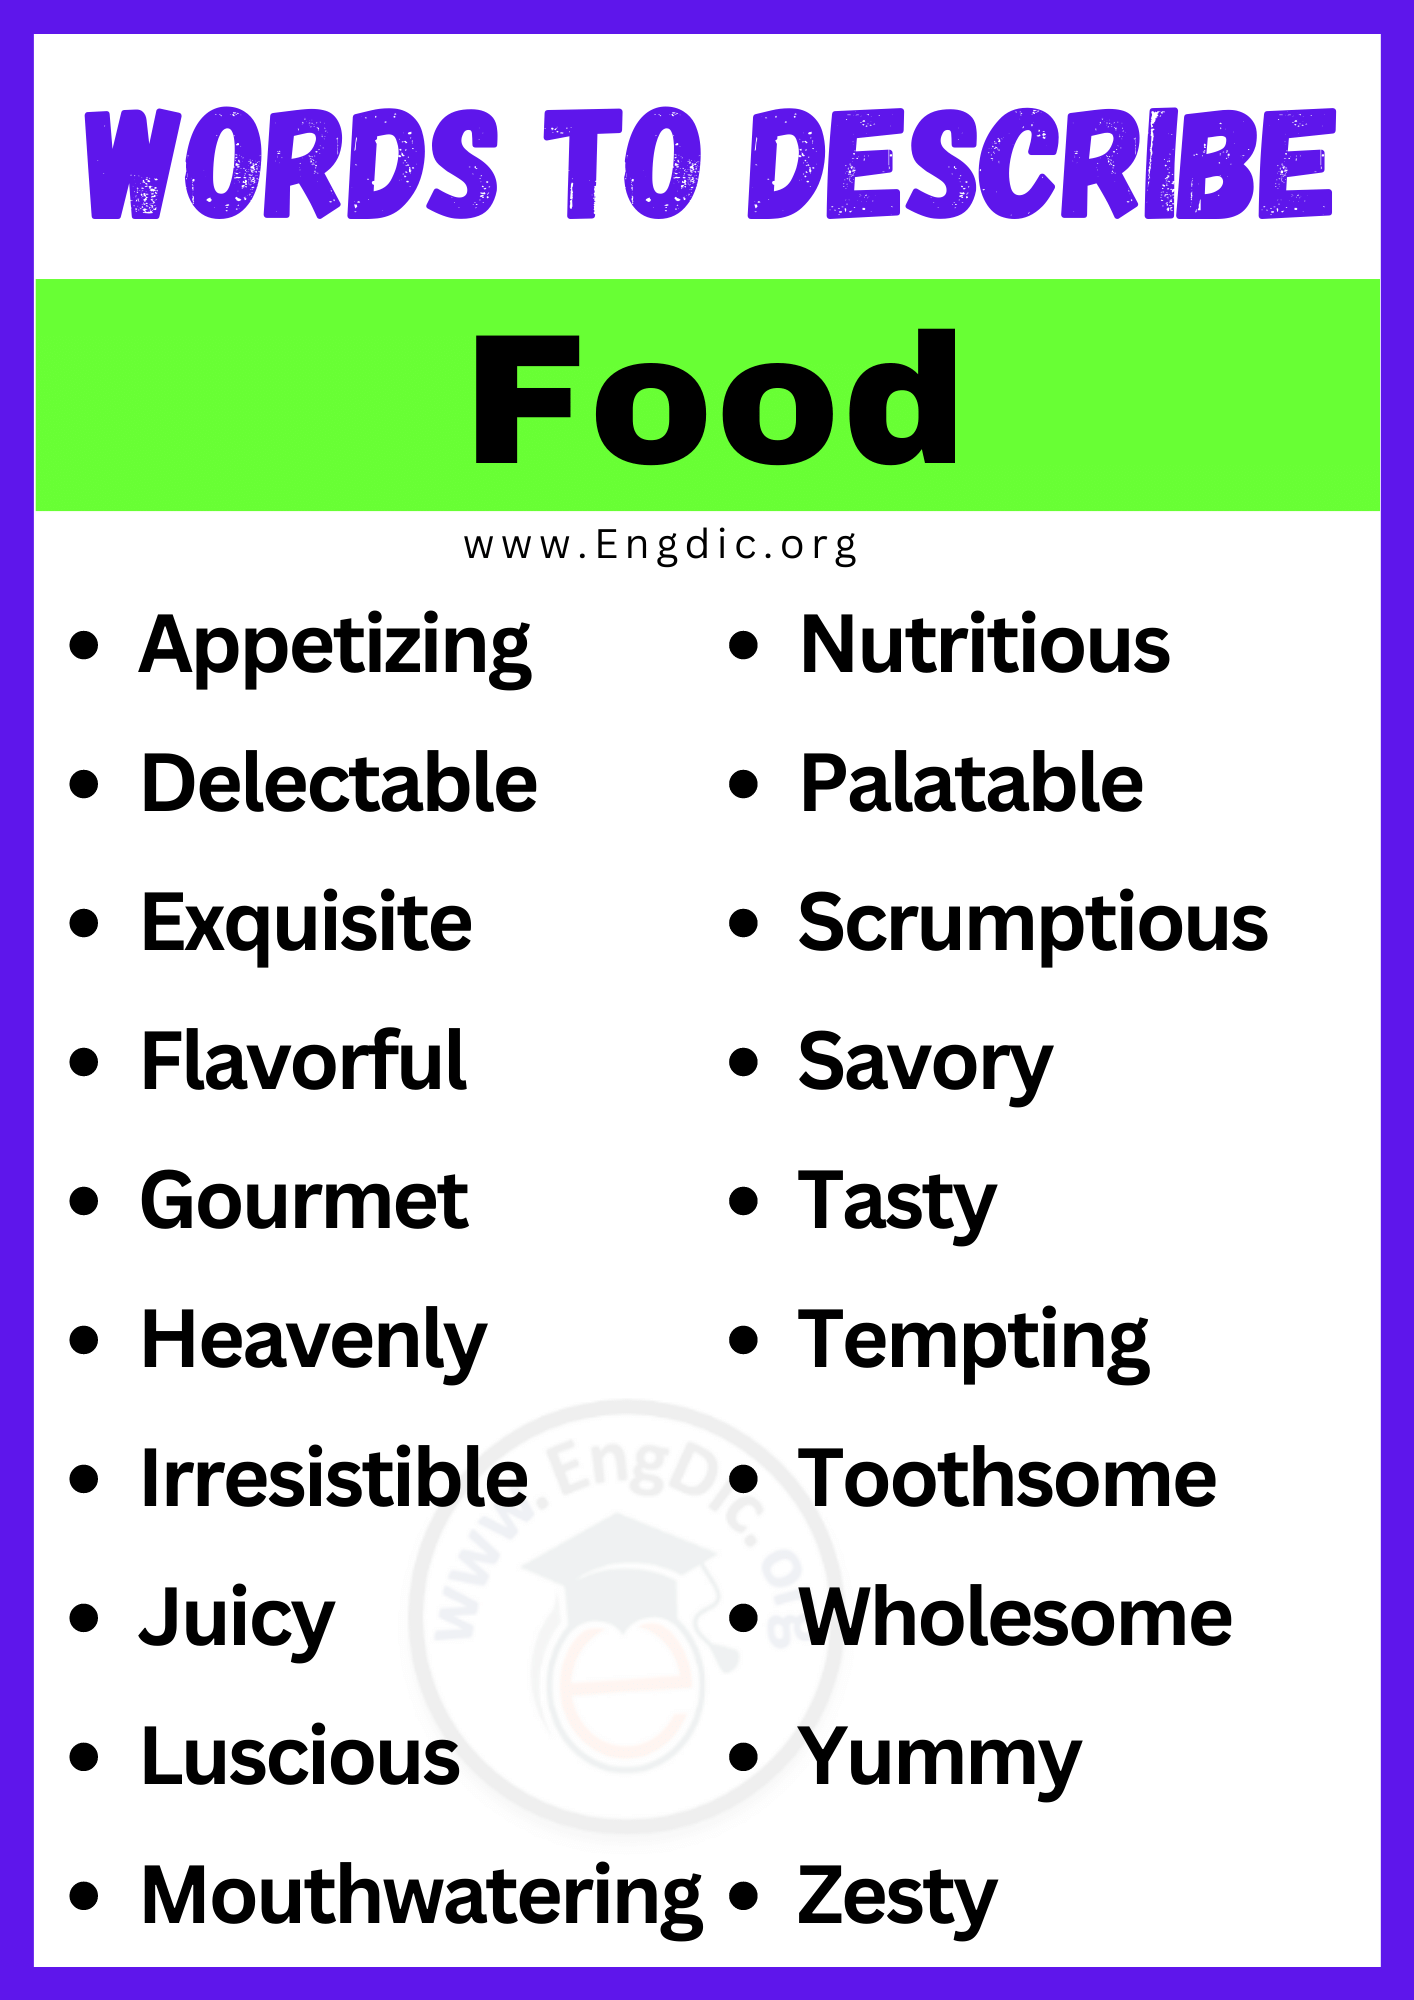 Words to Describe Food